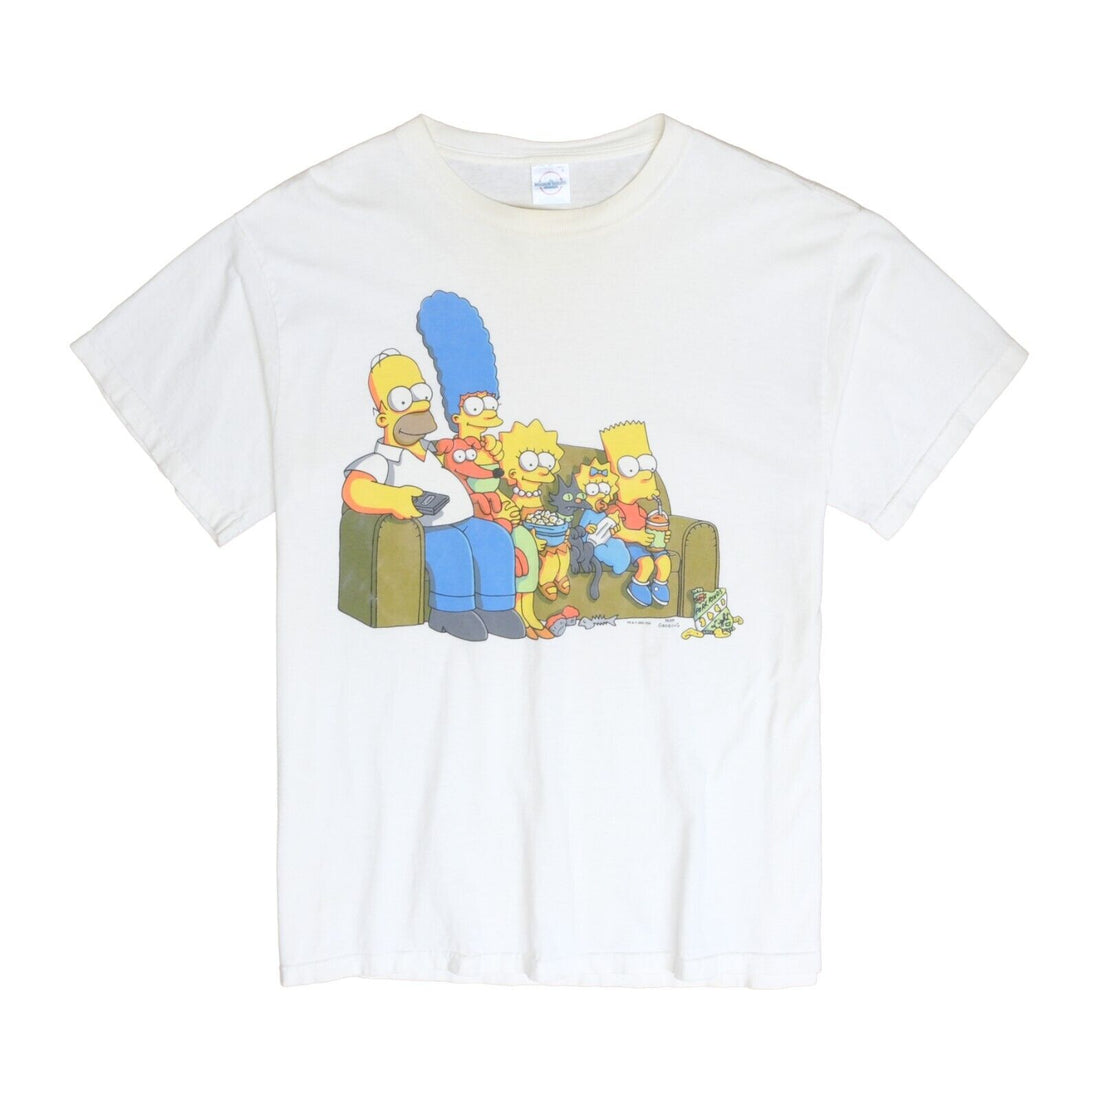 Vintage The Simpsons T-Shirt Size Large White TV Show Cartoon Promo 2002